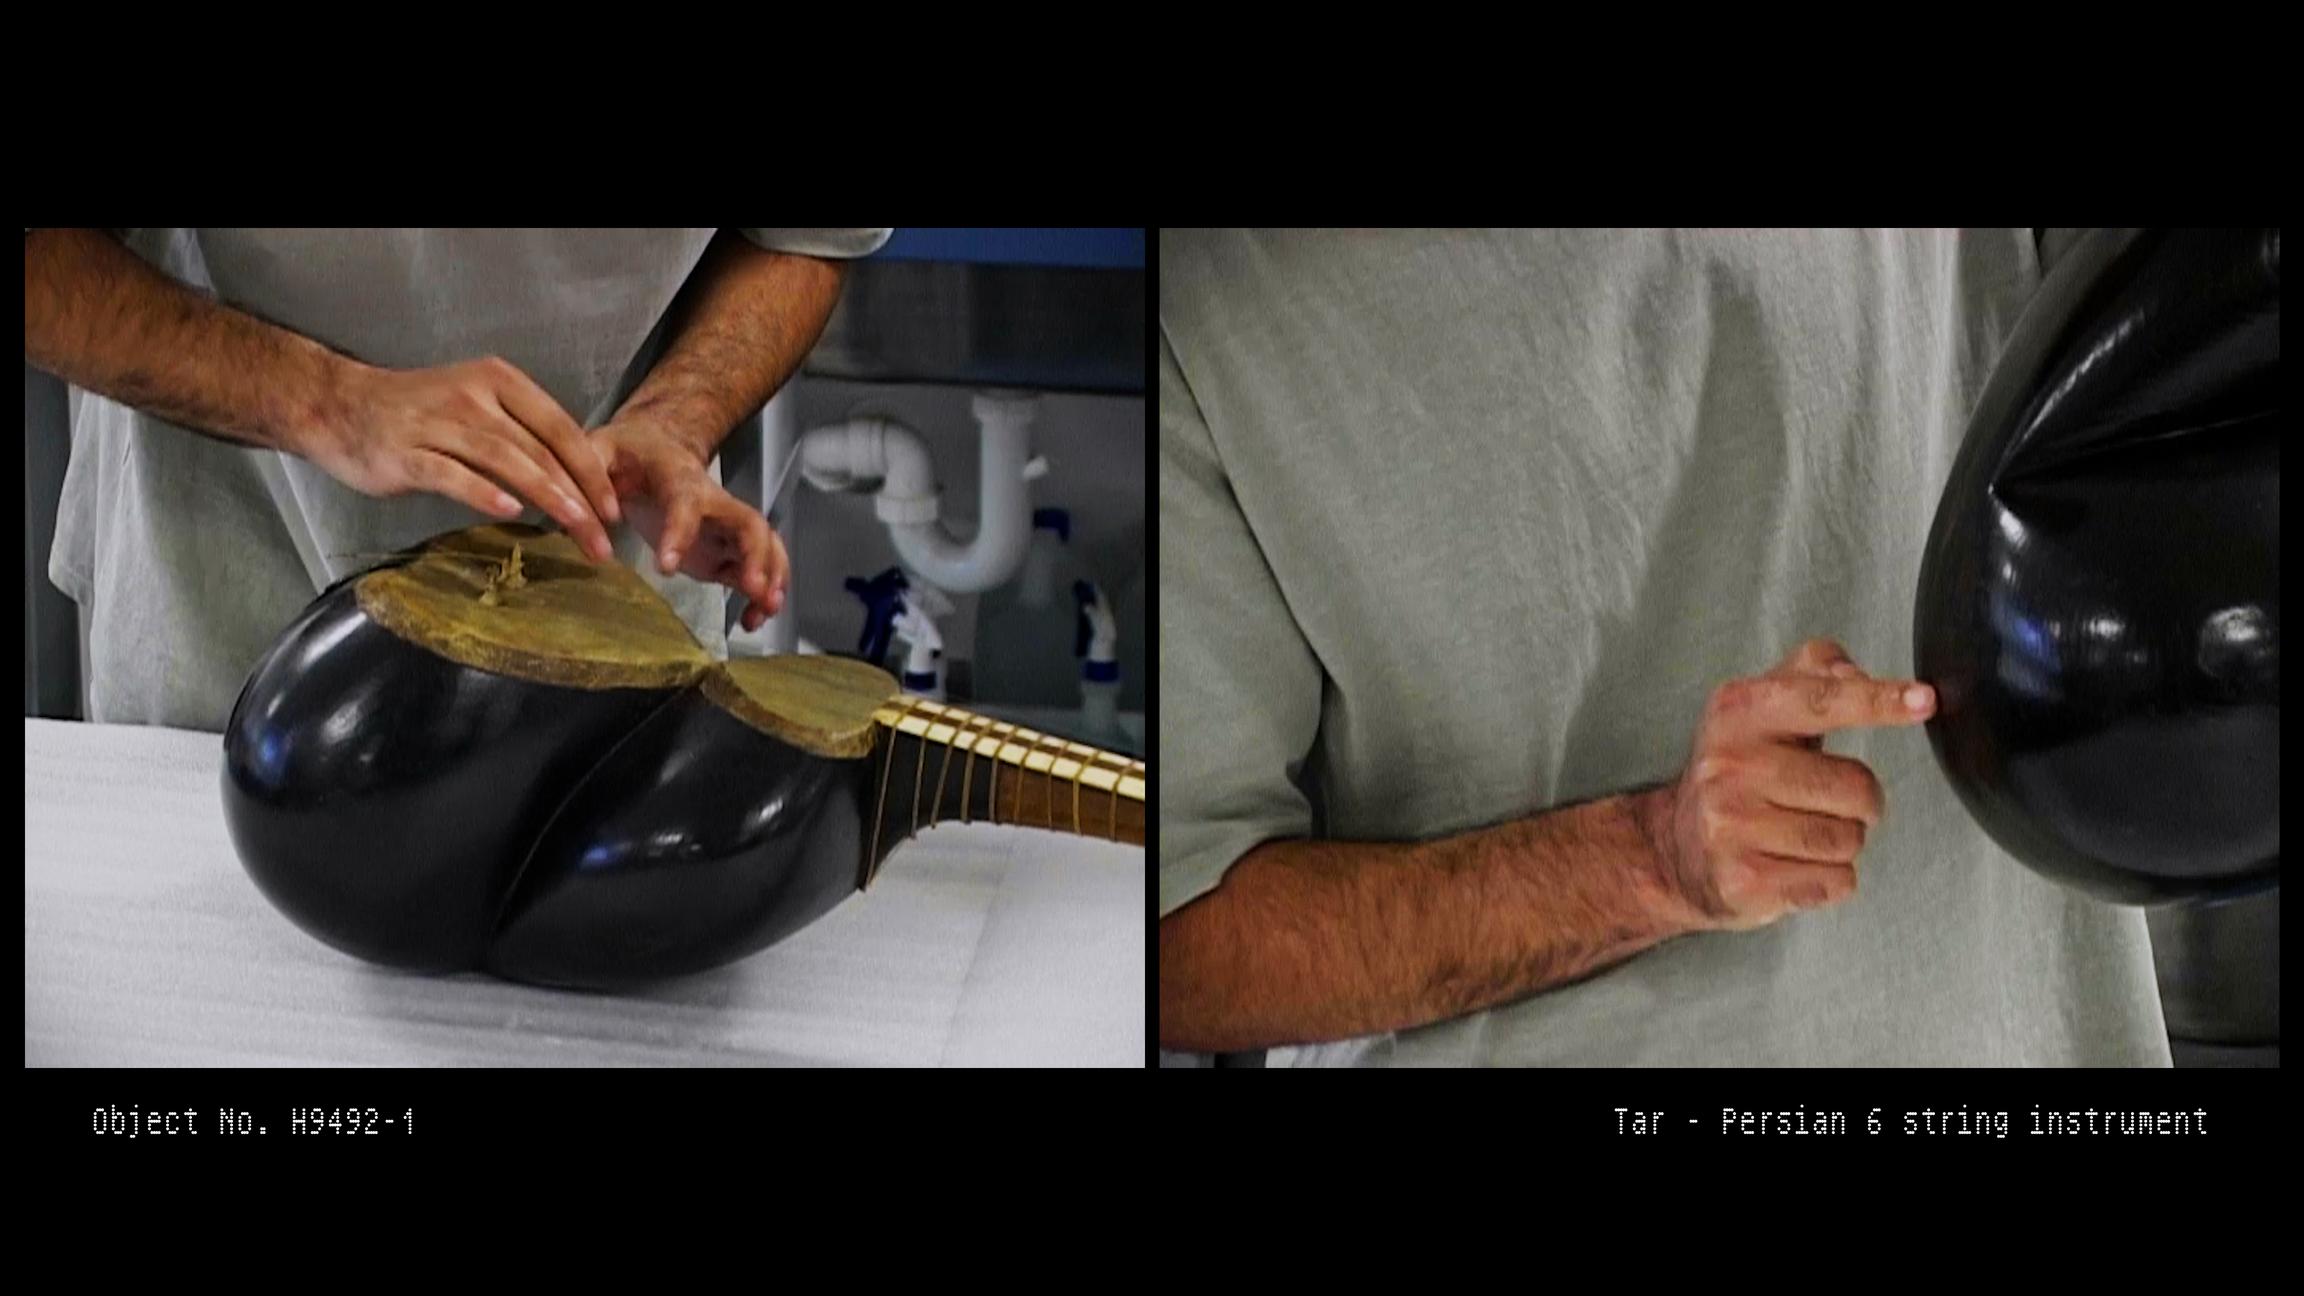 Hamed Sadeghi inspects the Persian tar musical instrument